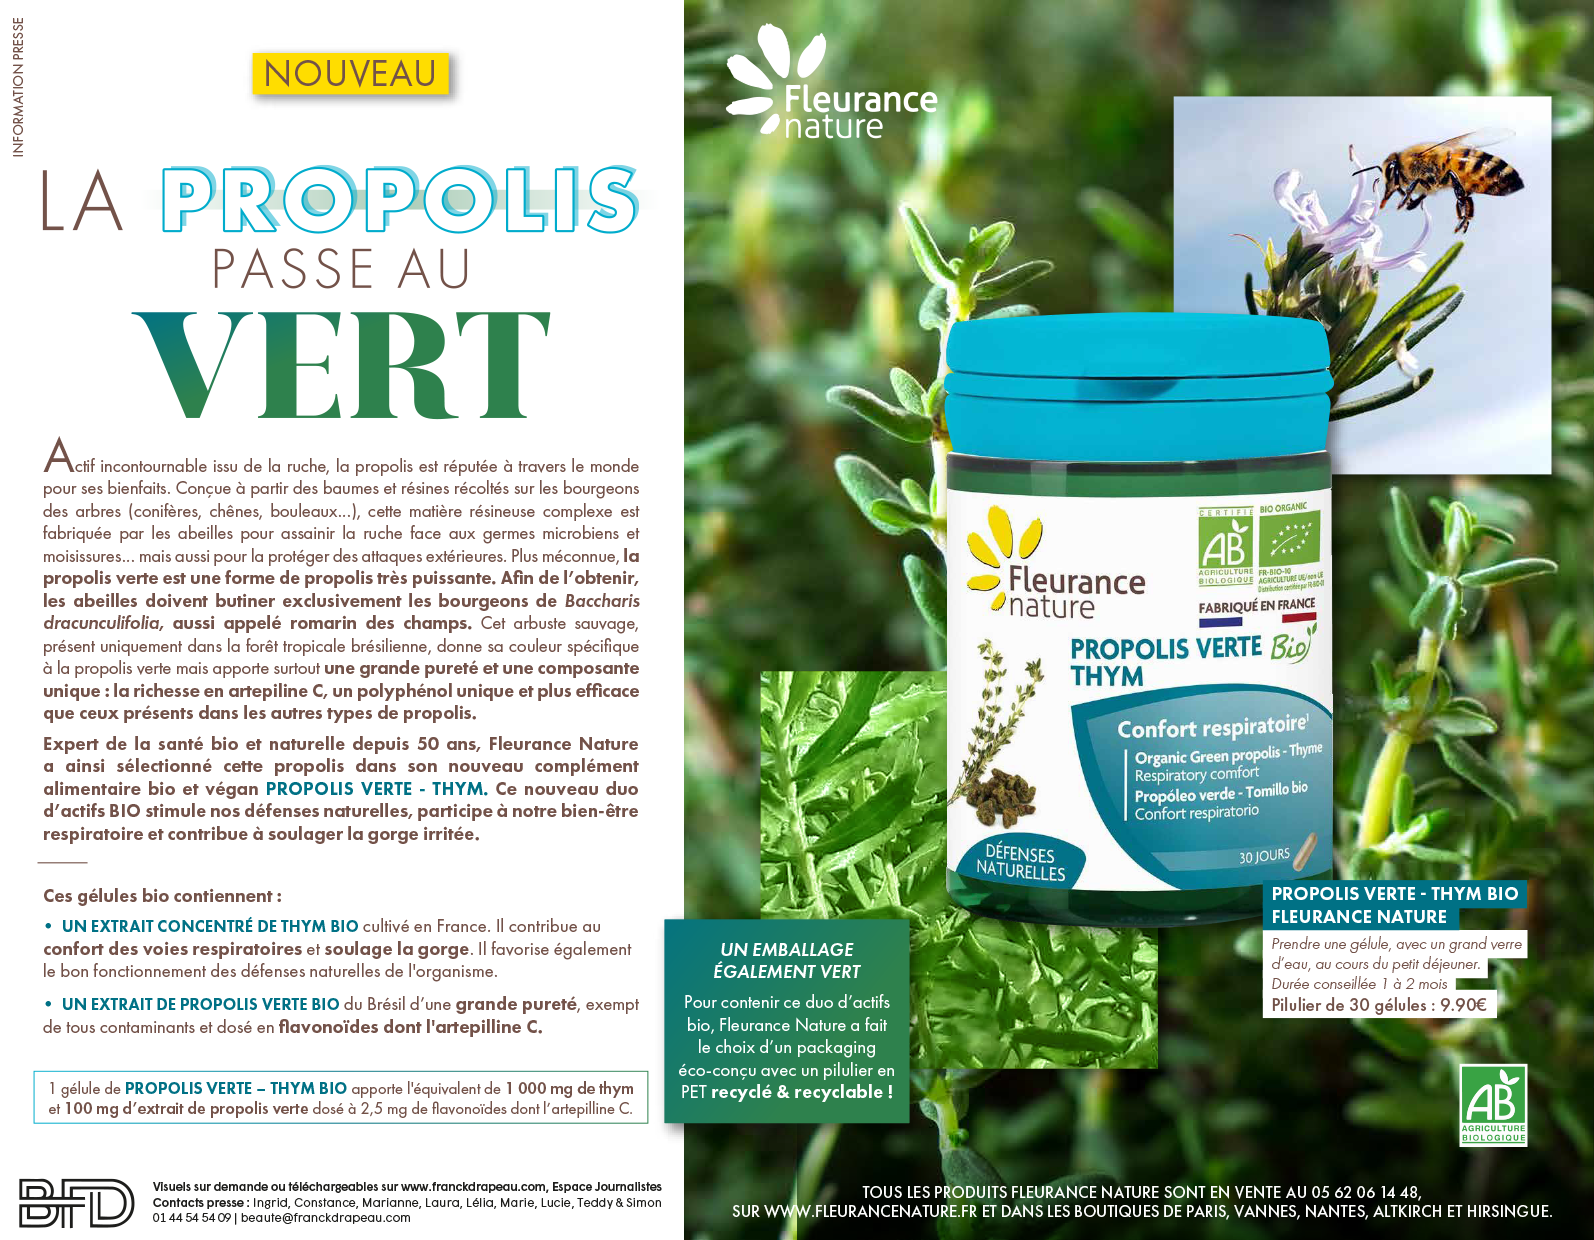 Fleurance Nature | Propolis verte bio – Thym